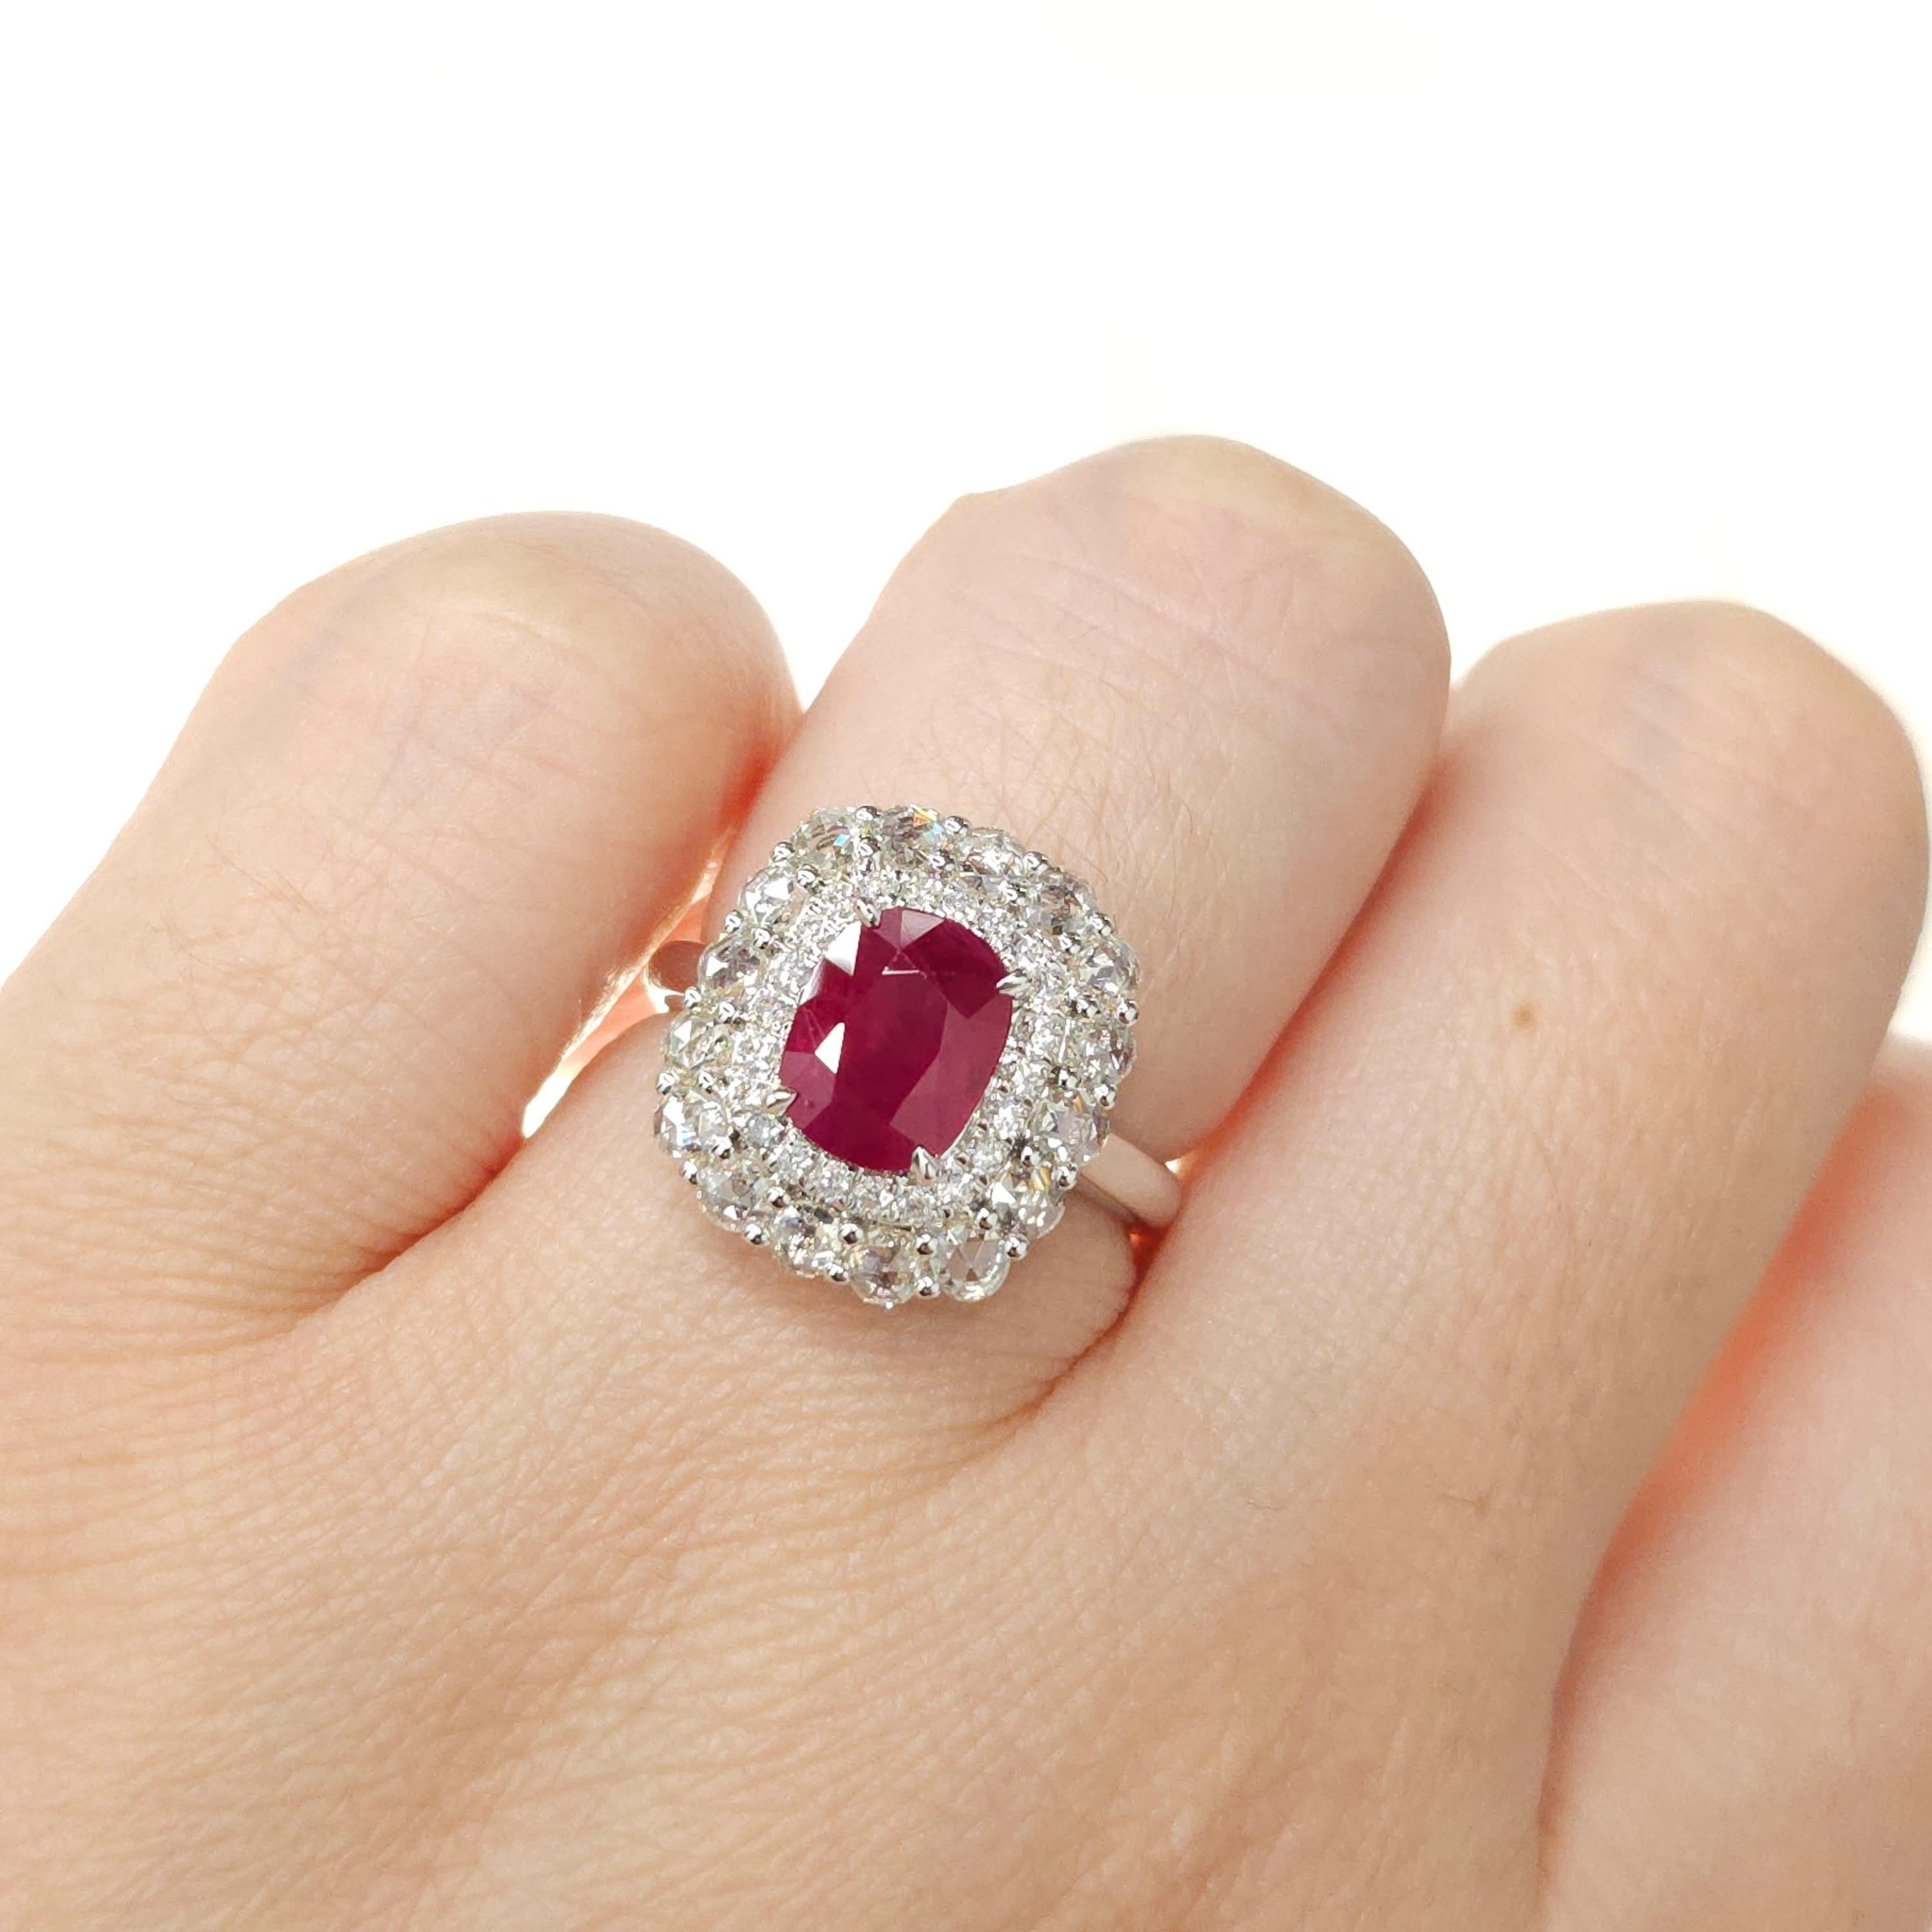 IGI Certified 2.26 Carat  Burma Ruby & Diamond Ring in 18K White Gold For Sale 2